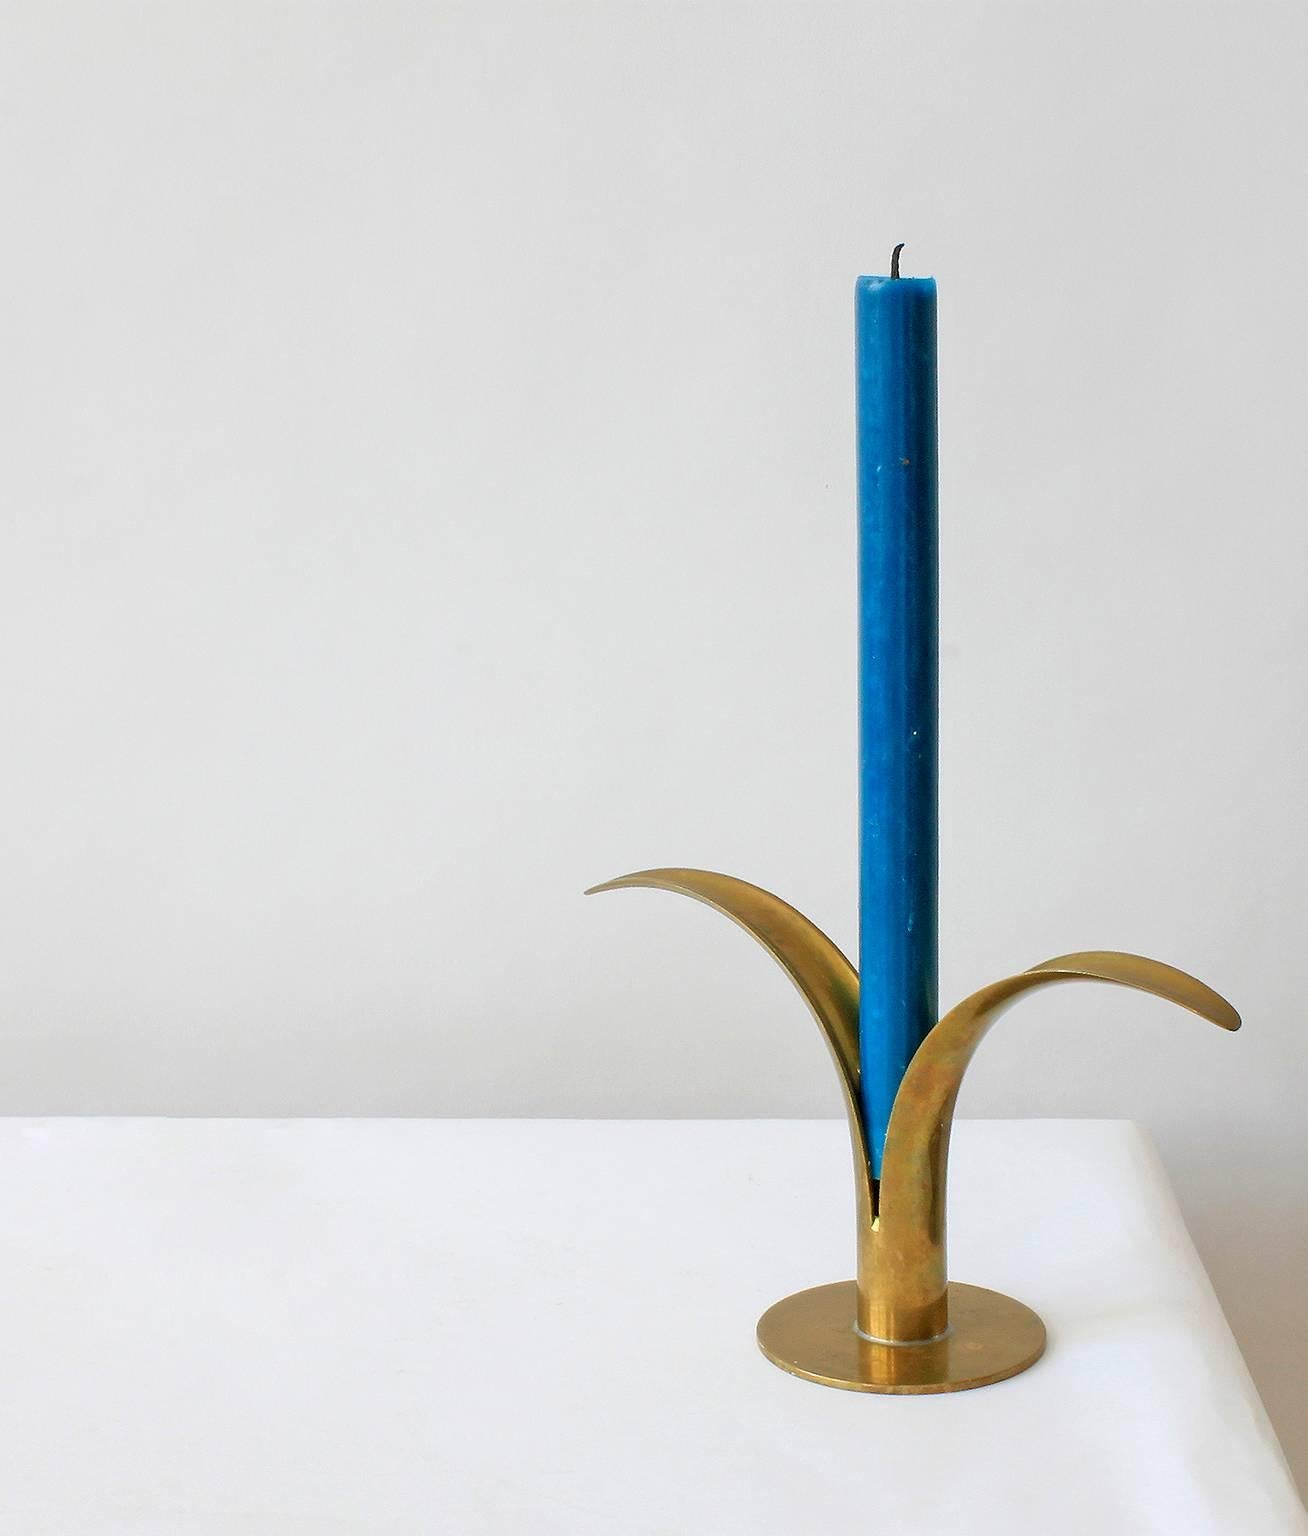 A pair of brass Liljan candle holders design by Ivar Ålenius Bjork for the Swedish maker, Ystad Metall, in the 1930s.